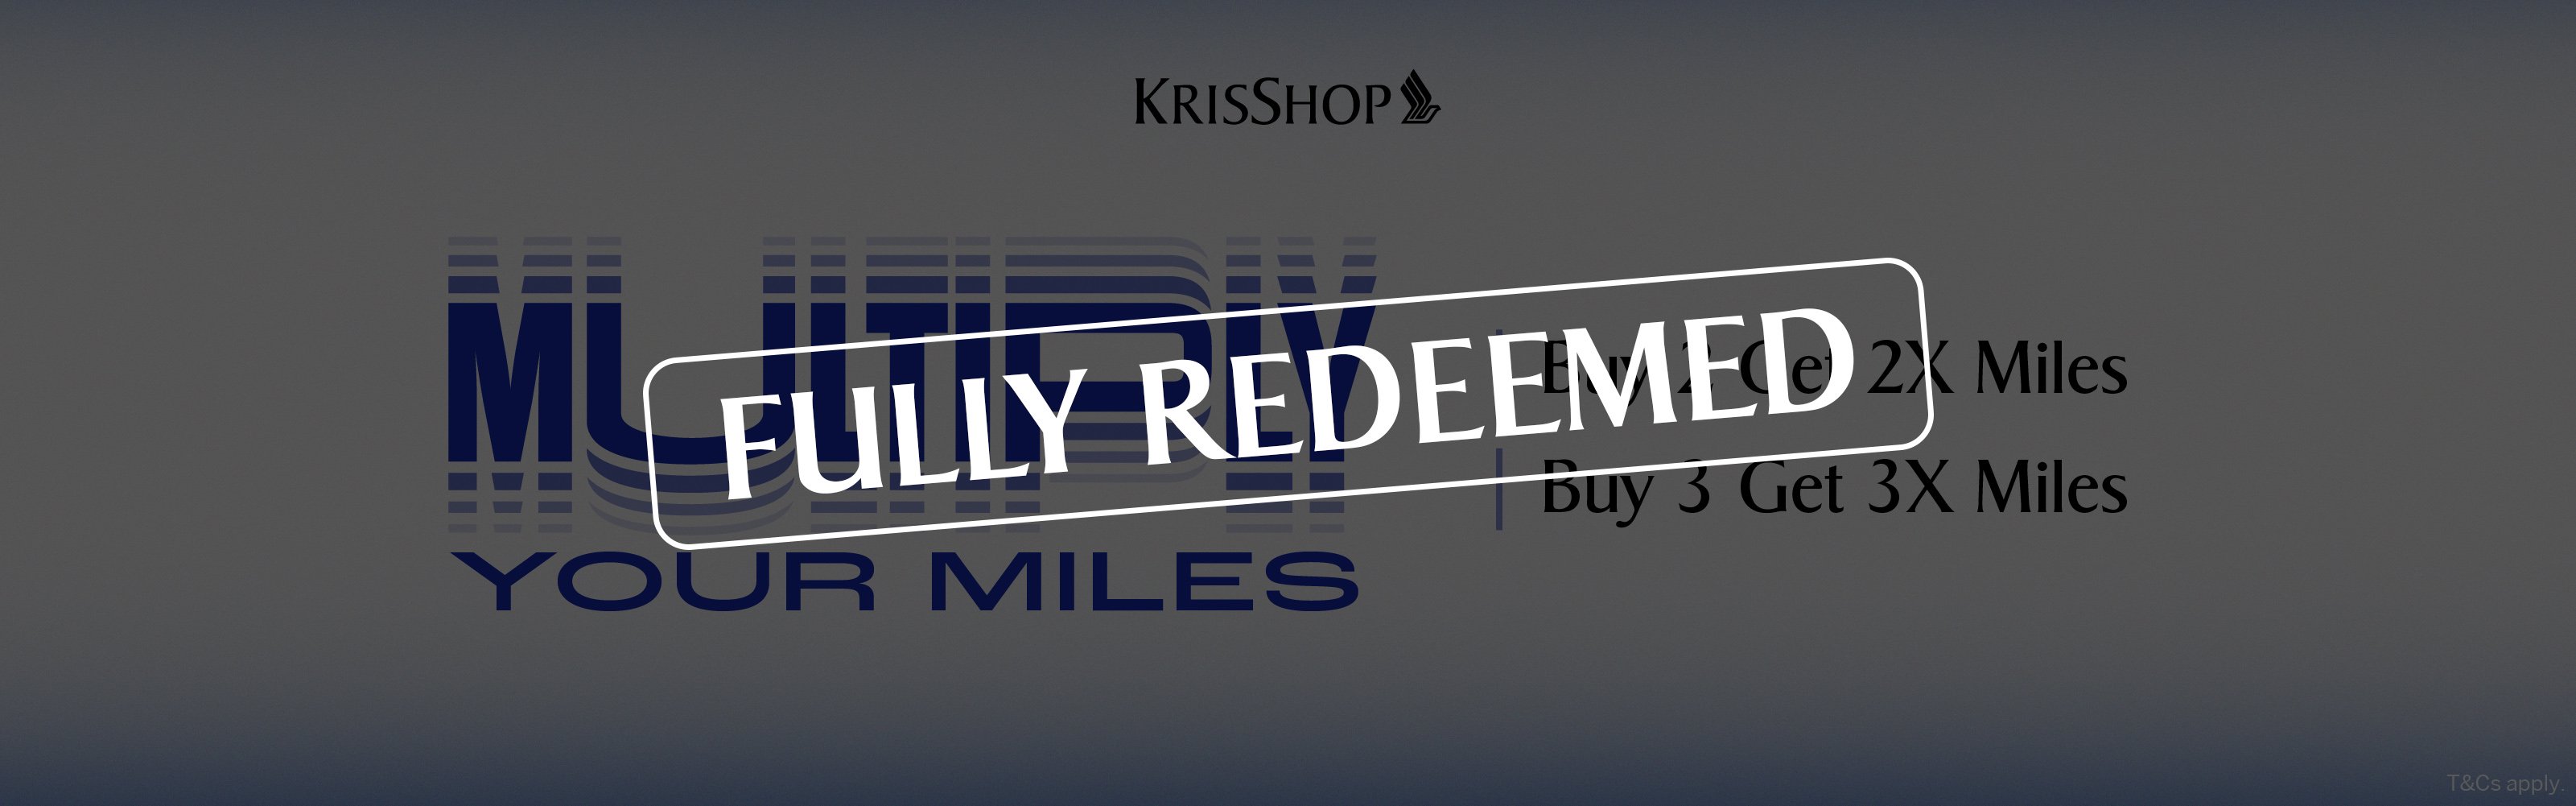 KrisShop's Multiply Your Miles